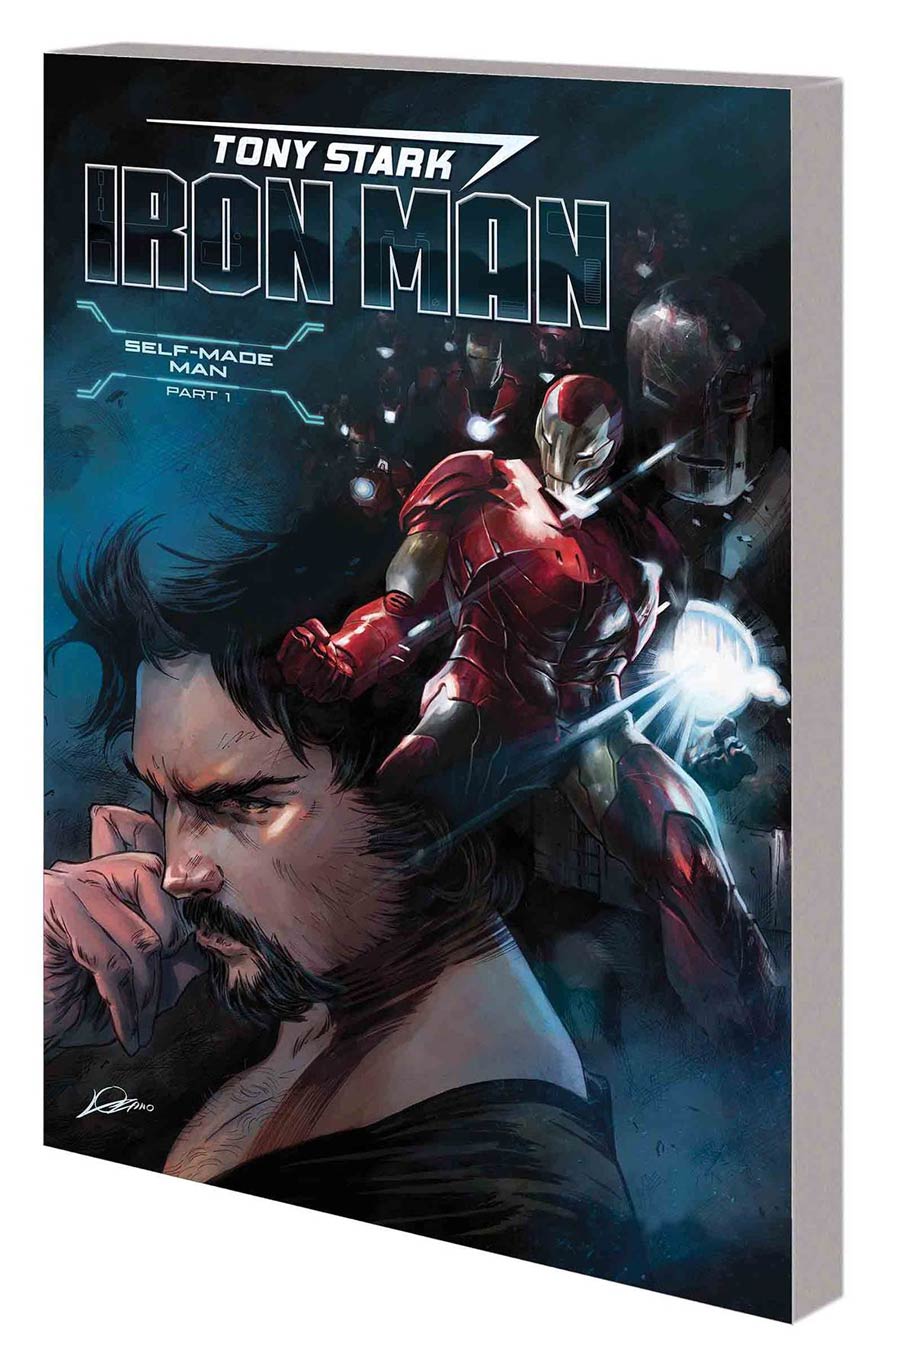 Tony Stark Iron Man Vol 1 Self-Made Man TP